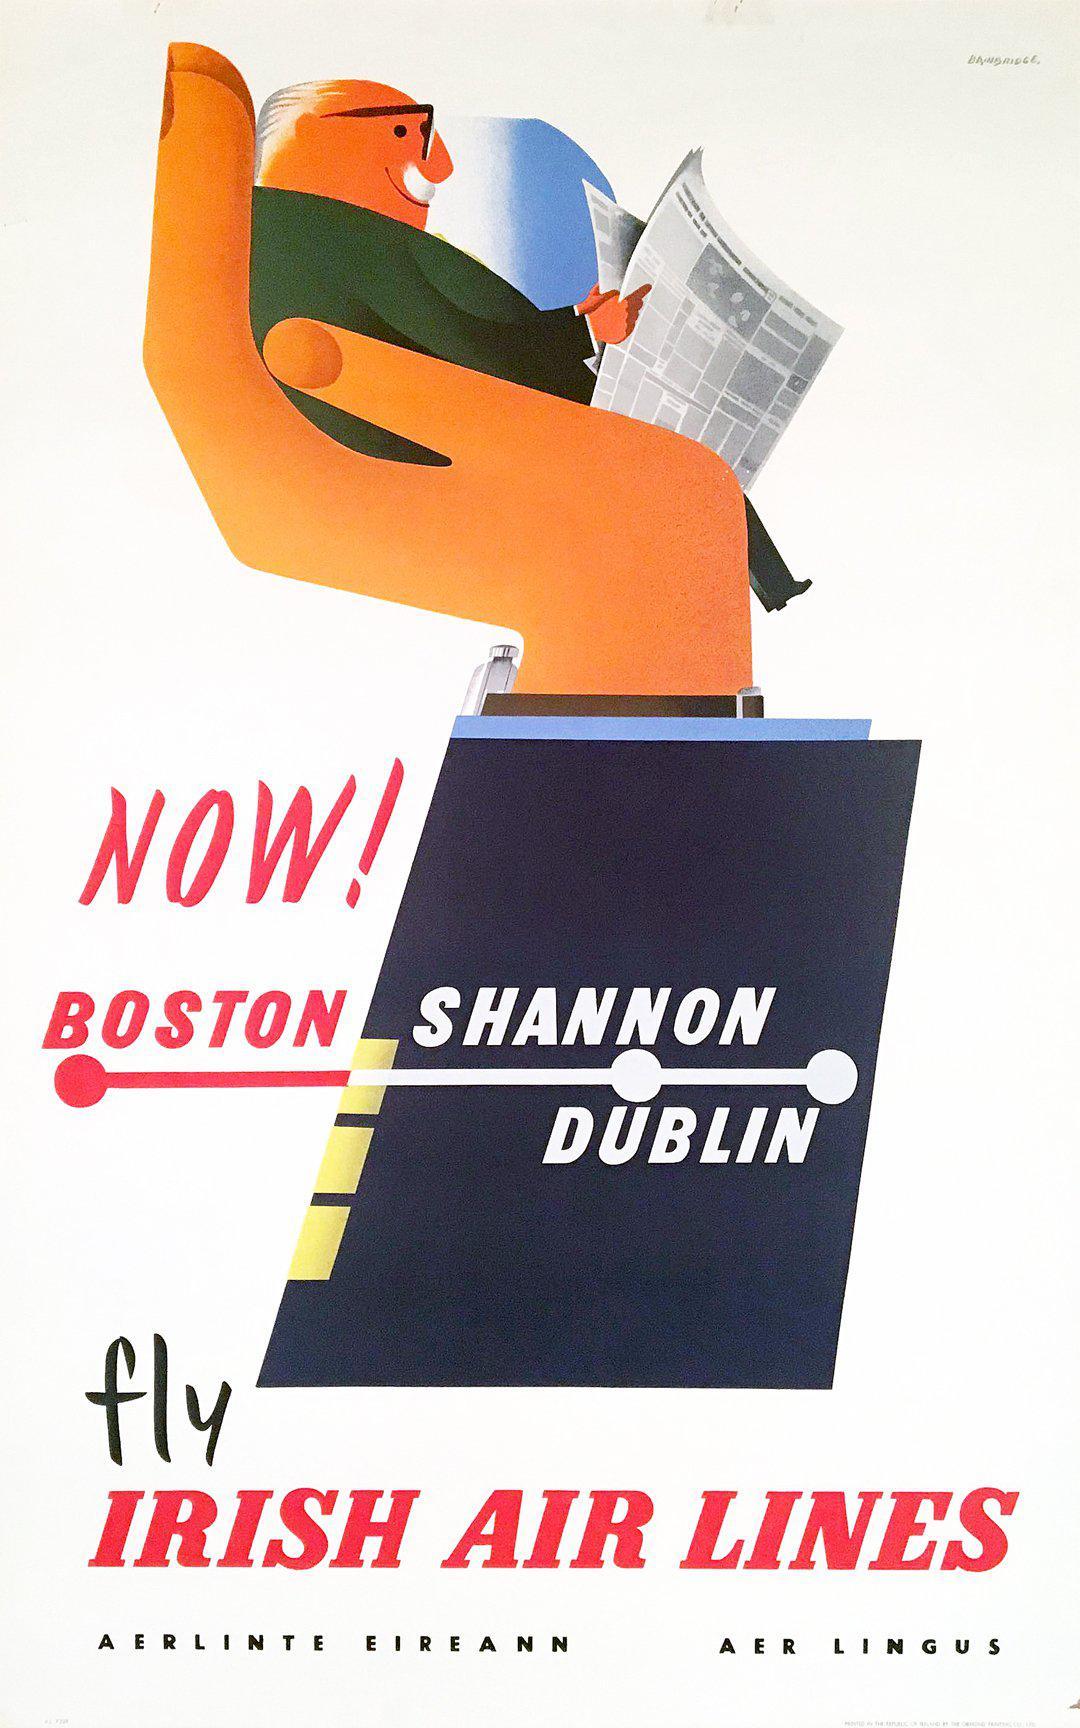 Original Vintage Irish Air Lines Poster Boston - Shannon - Dublin by John Bainbridge c1958